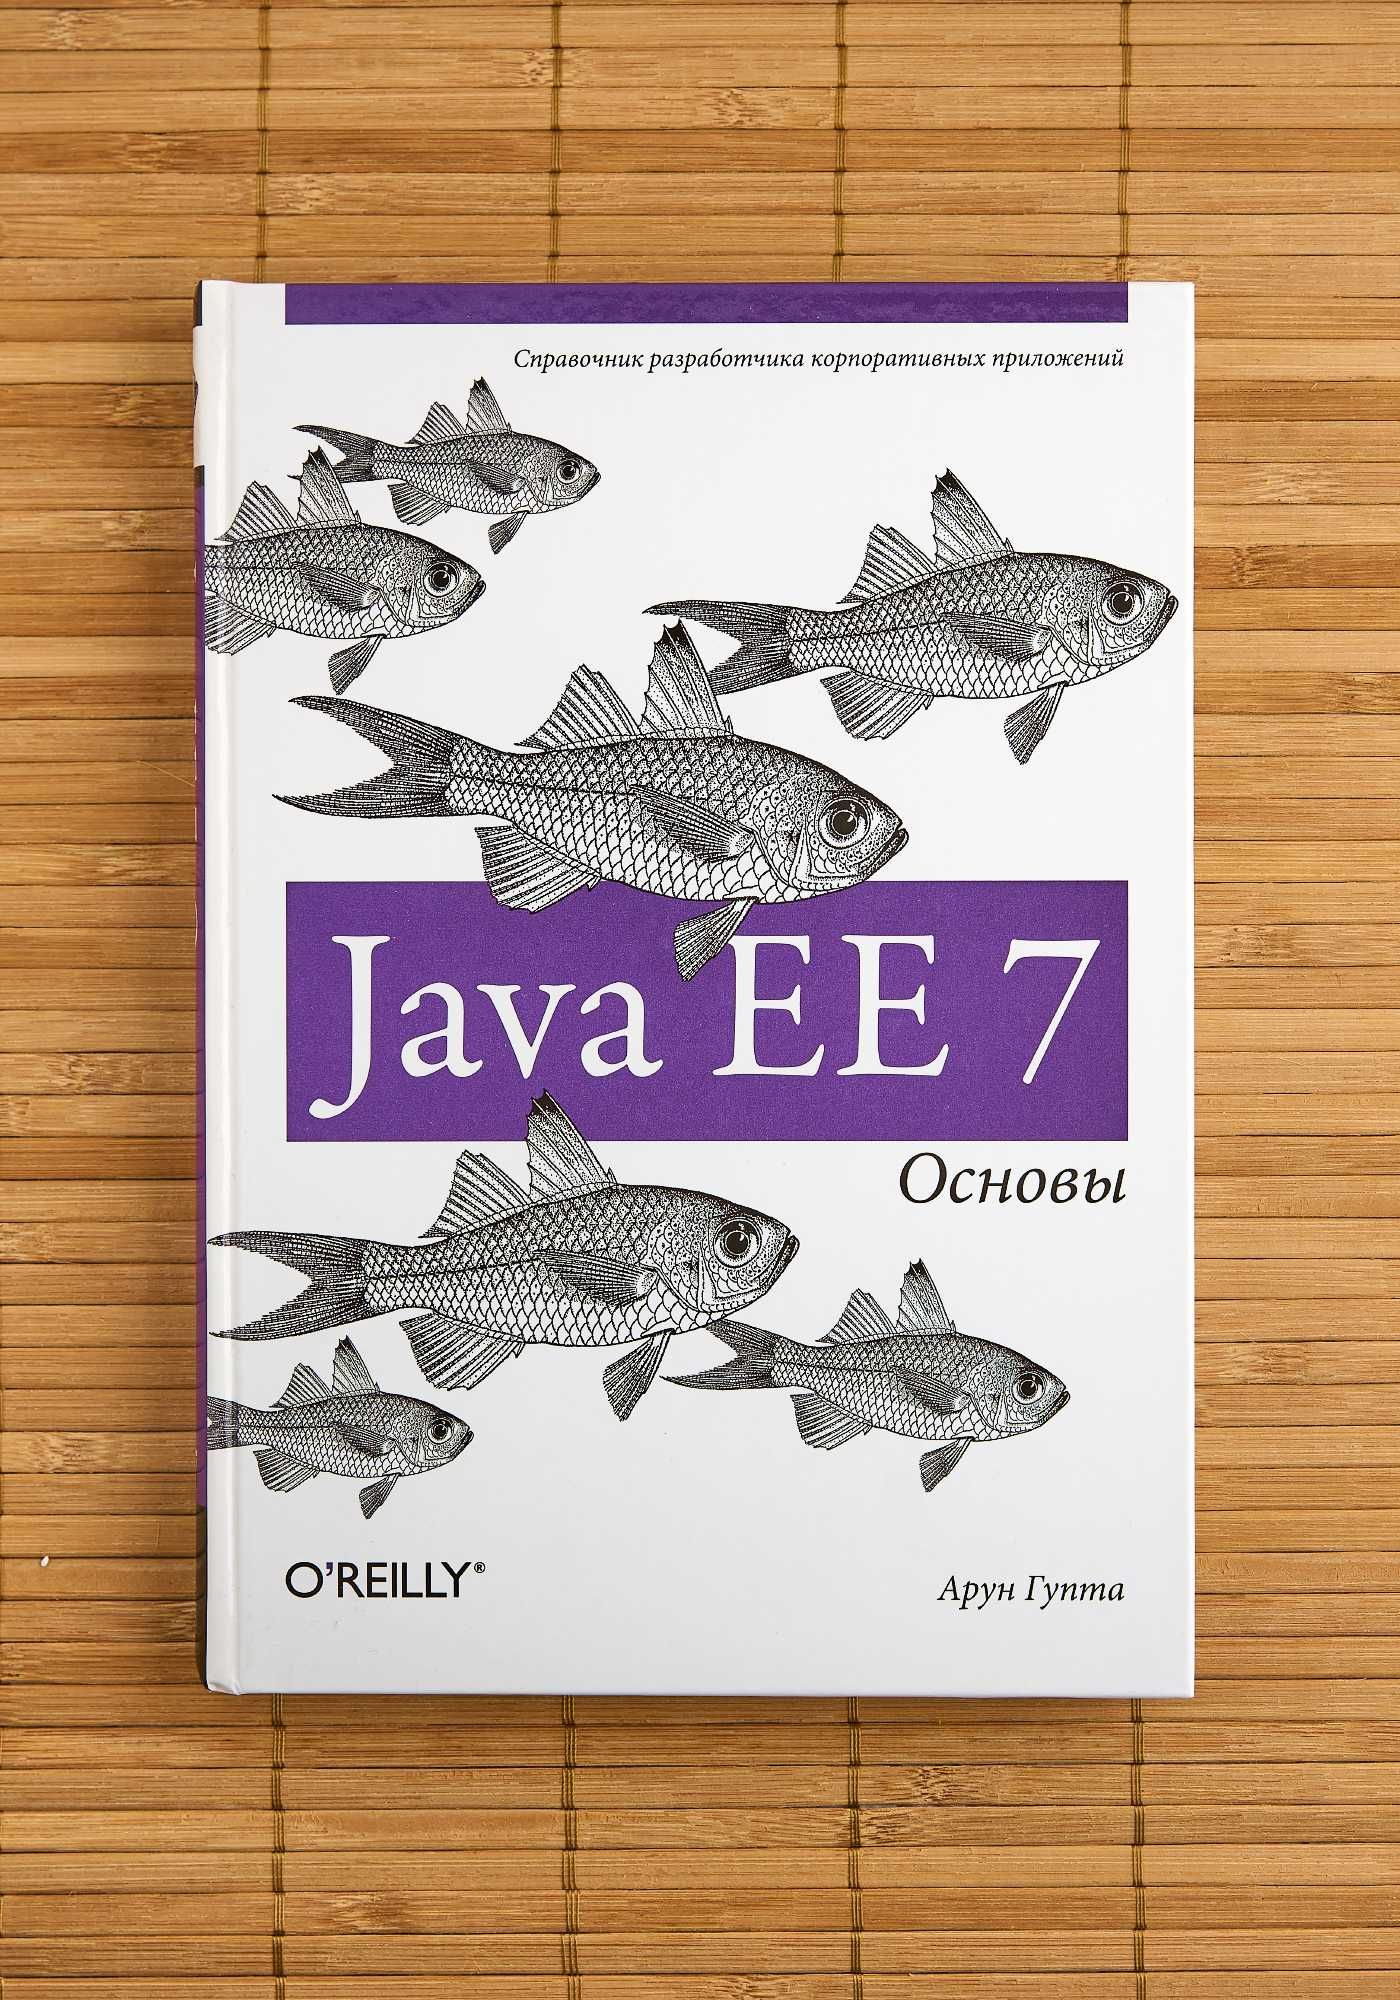 Книга "Java EE 7. Основы"